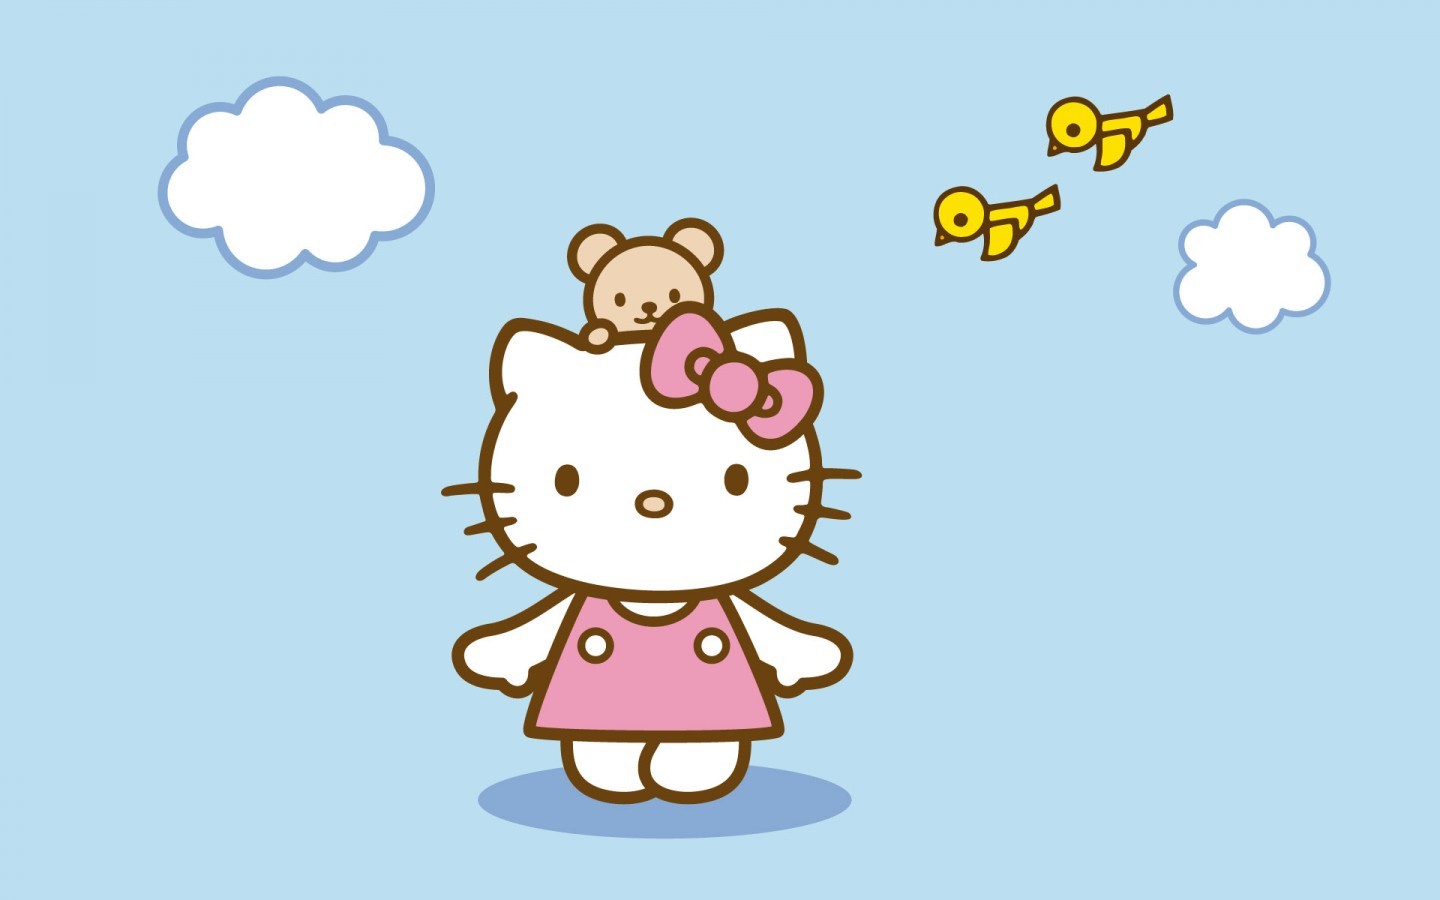 hellokitty 猫设计图__动漫人物_动漫动画_设计图库_昵图网nipic.com